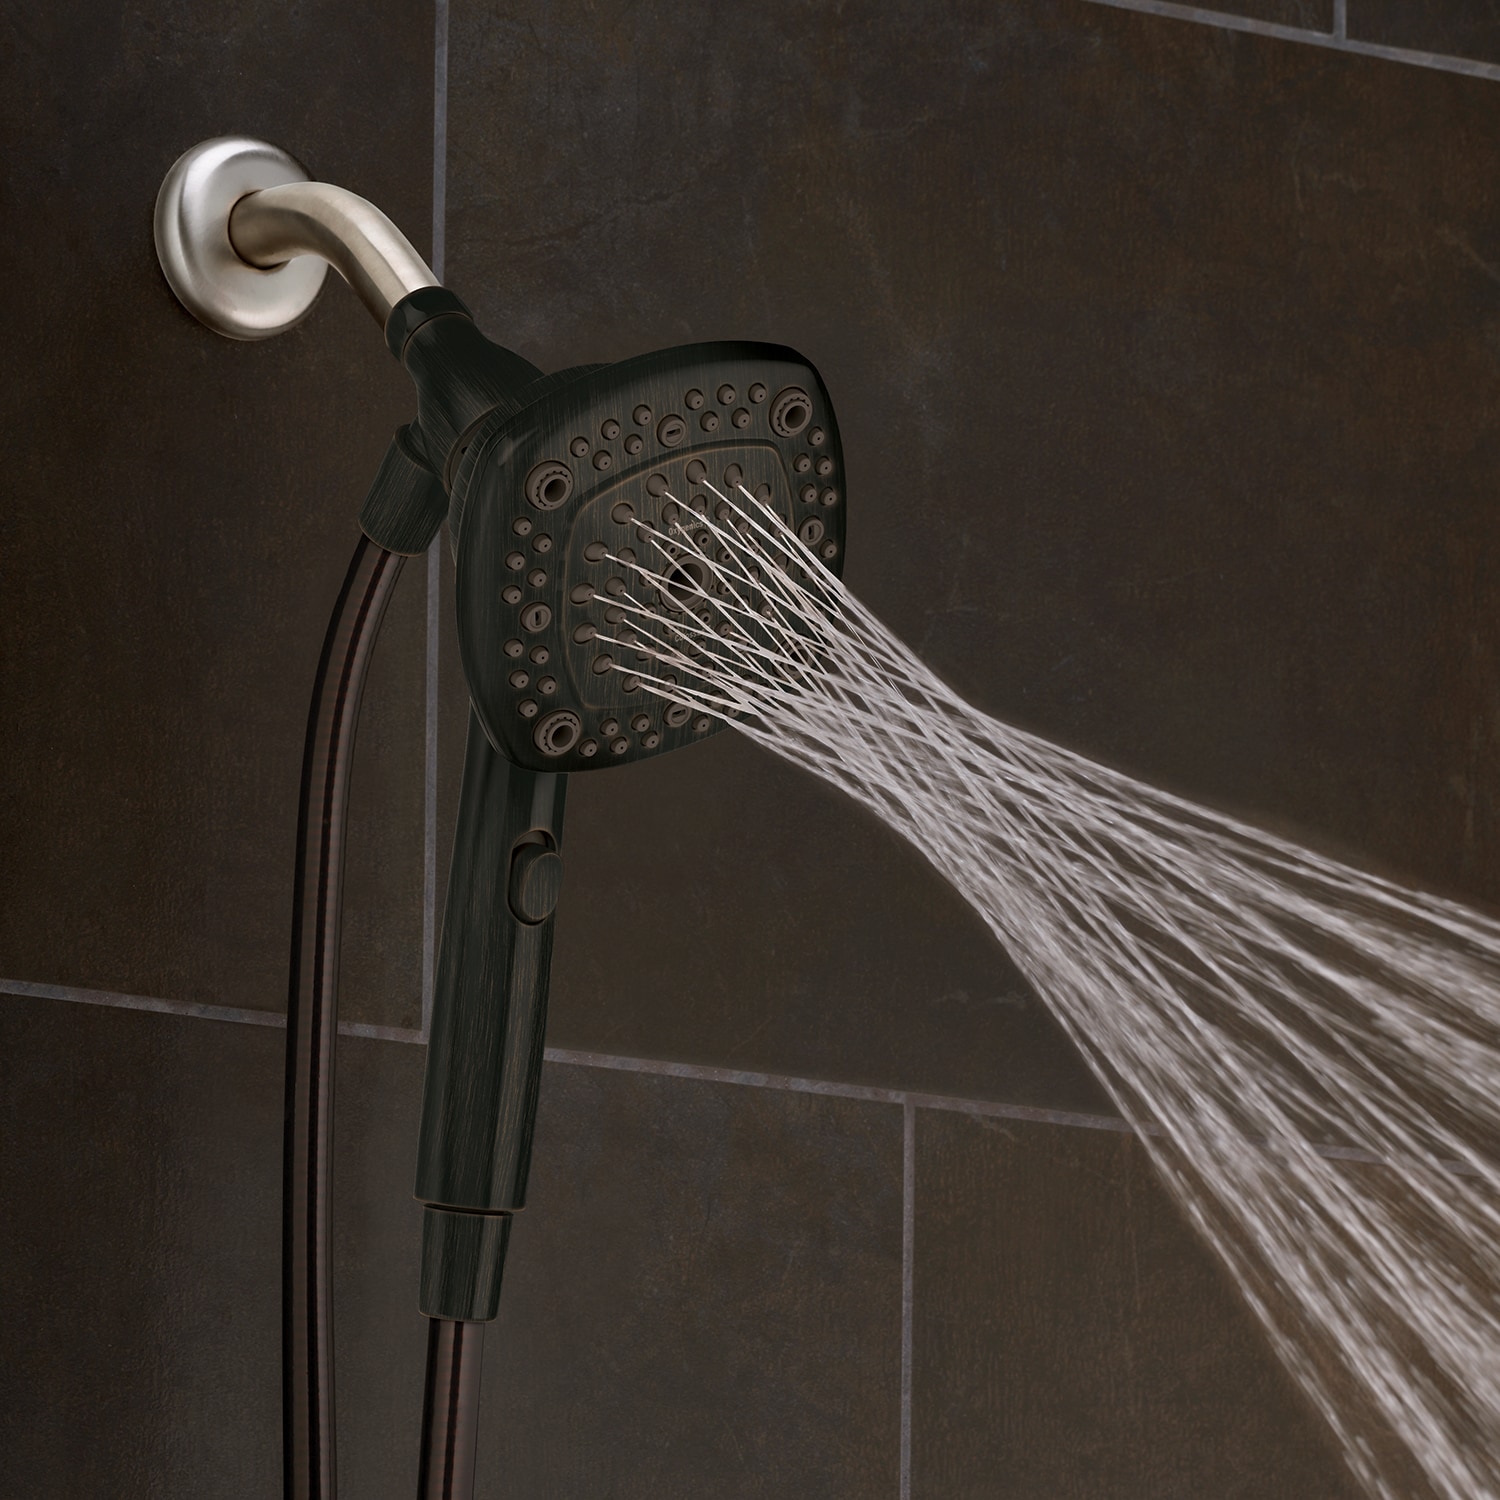 Square Shower Drain Cover, Made To Fit Kohler, Octopus Design